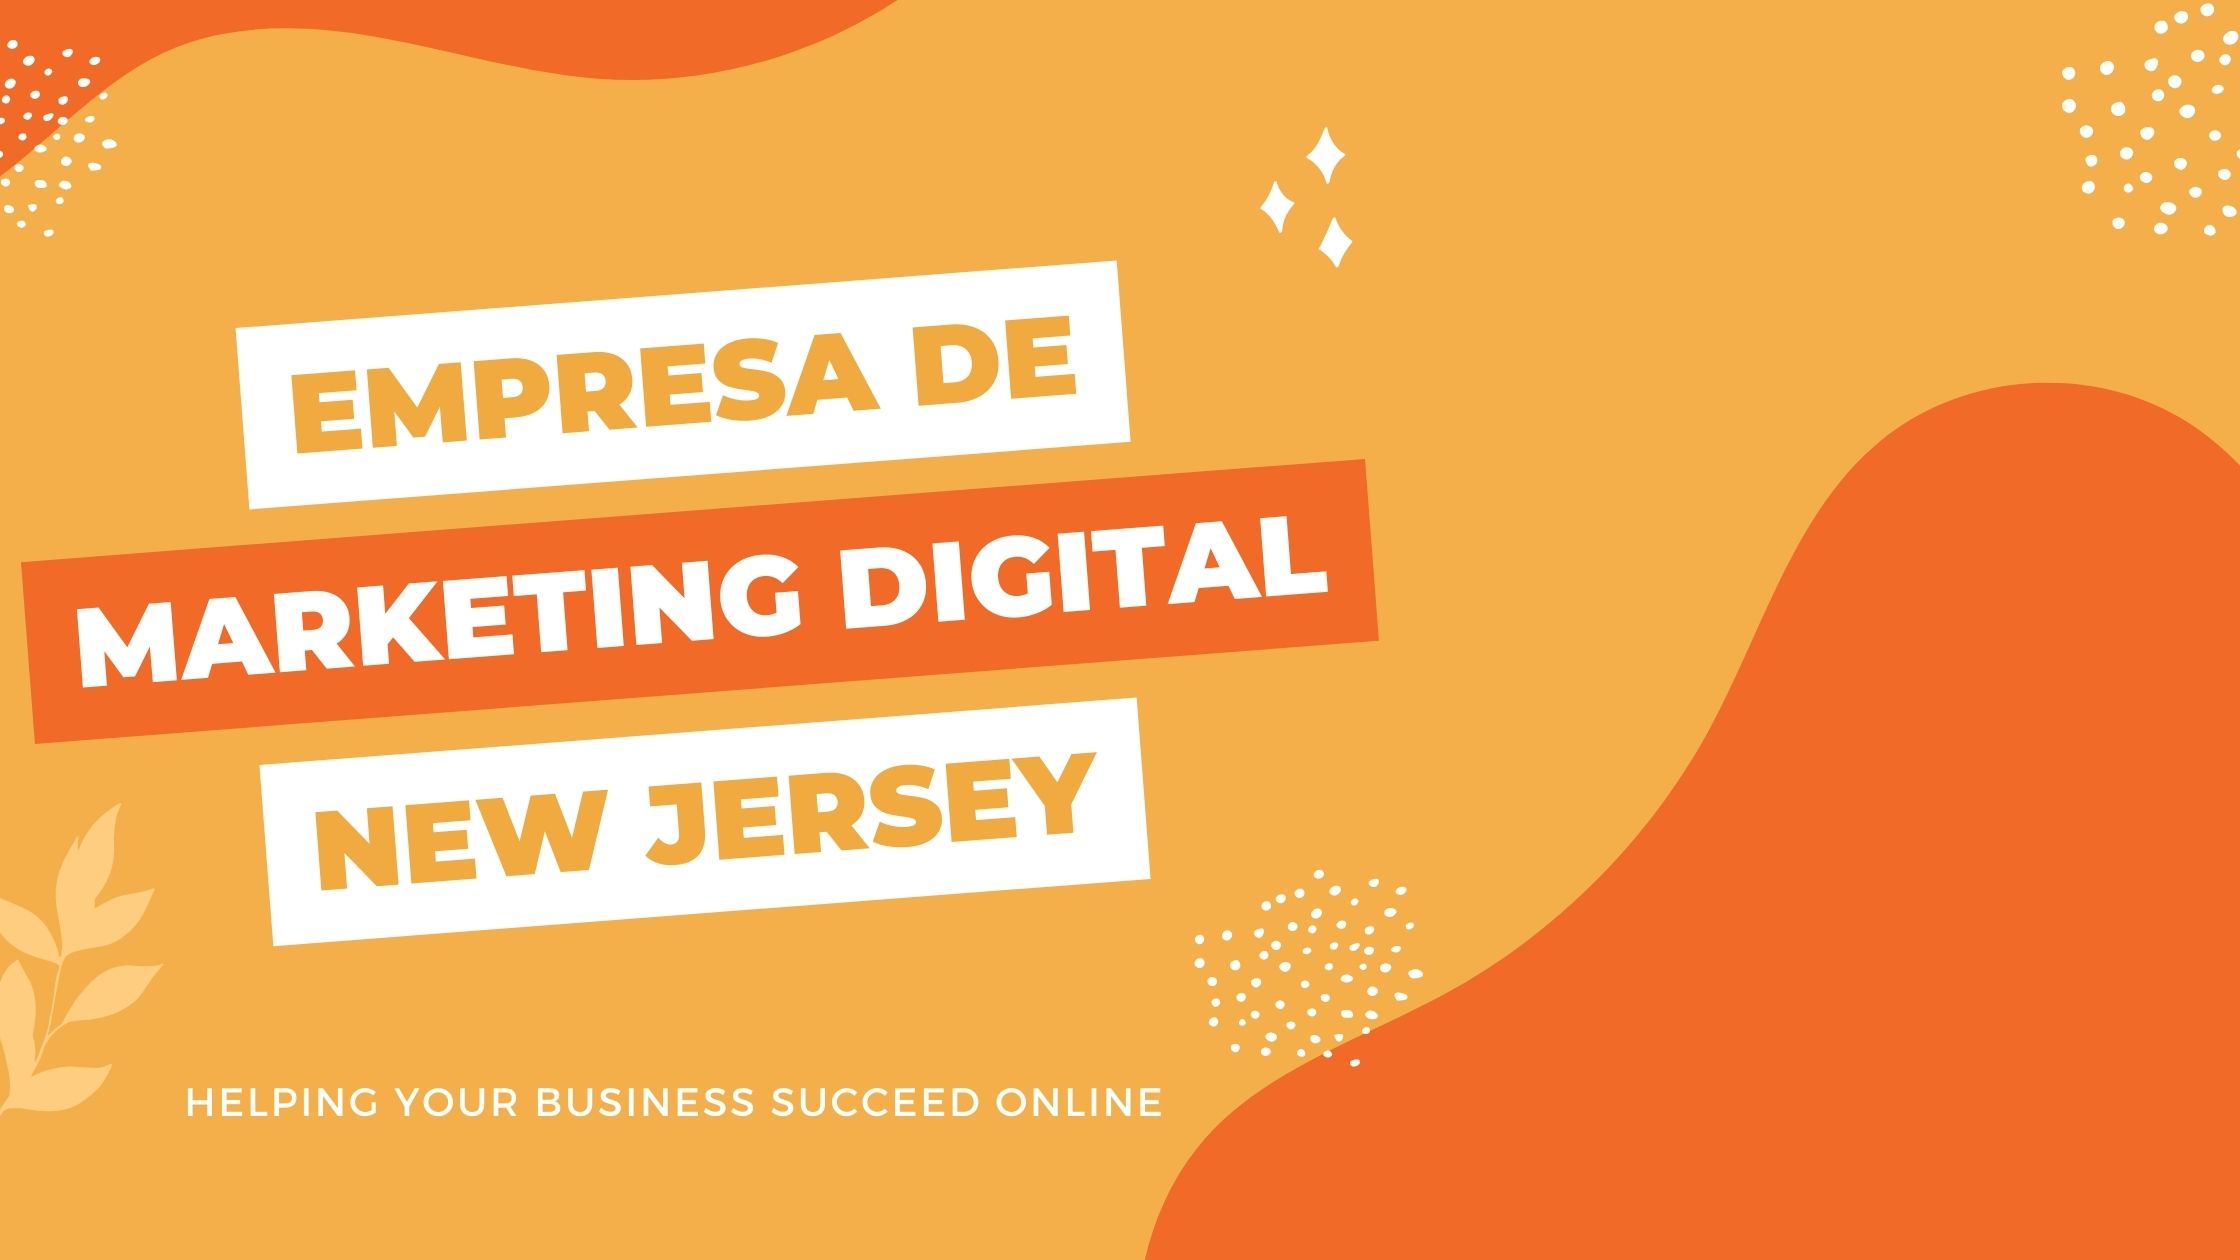 Empresa de Marketing Digital New Jersey: Helping Your Business Succeed Online